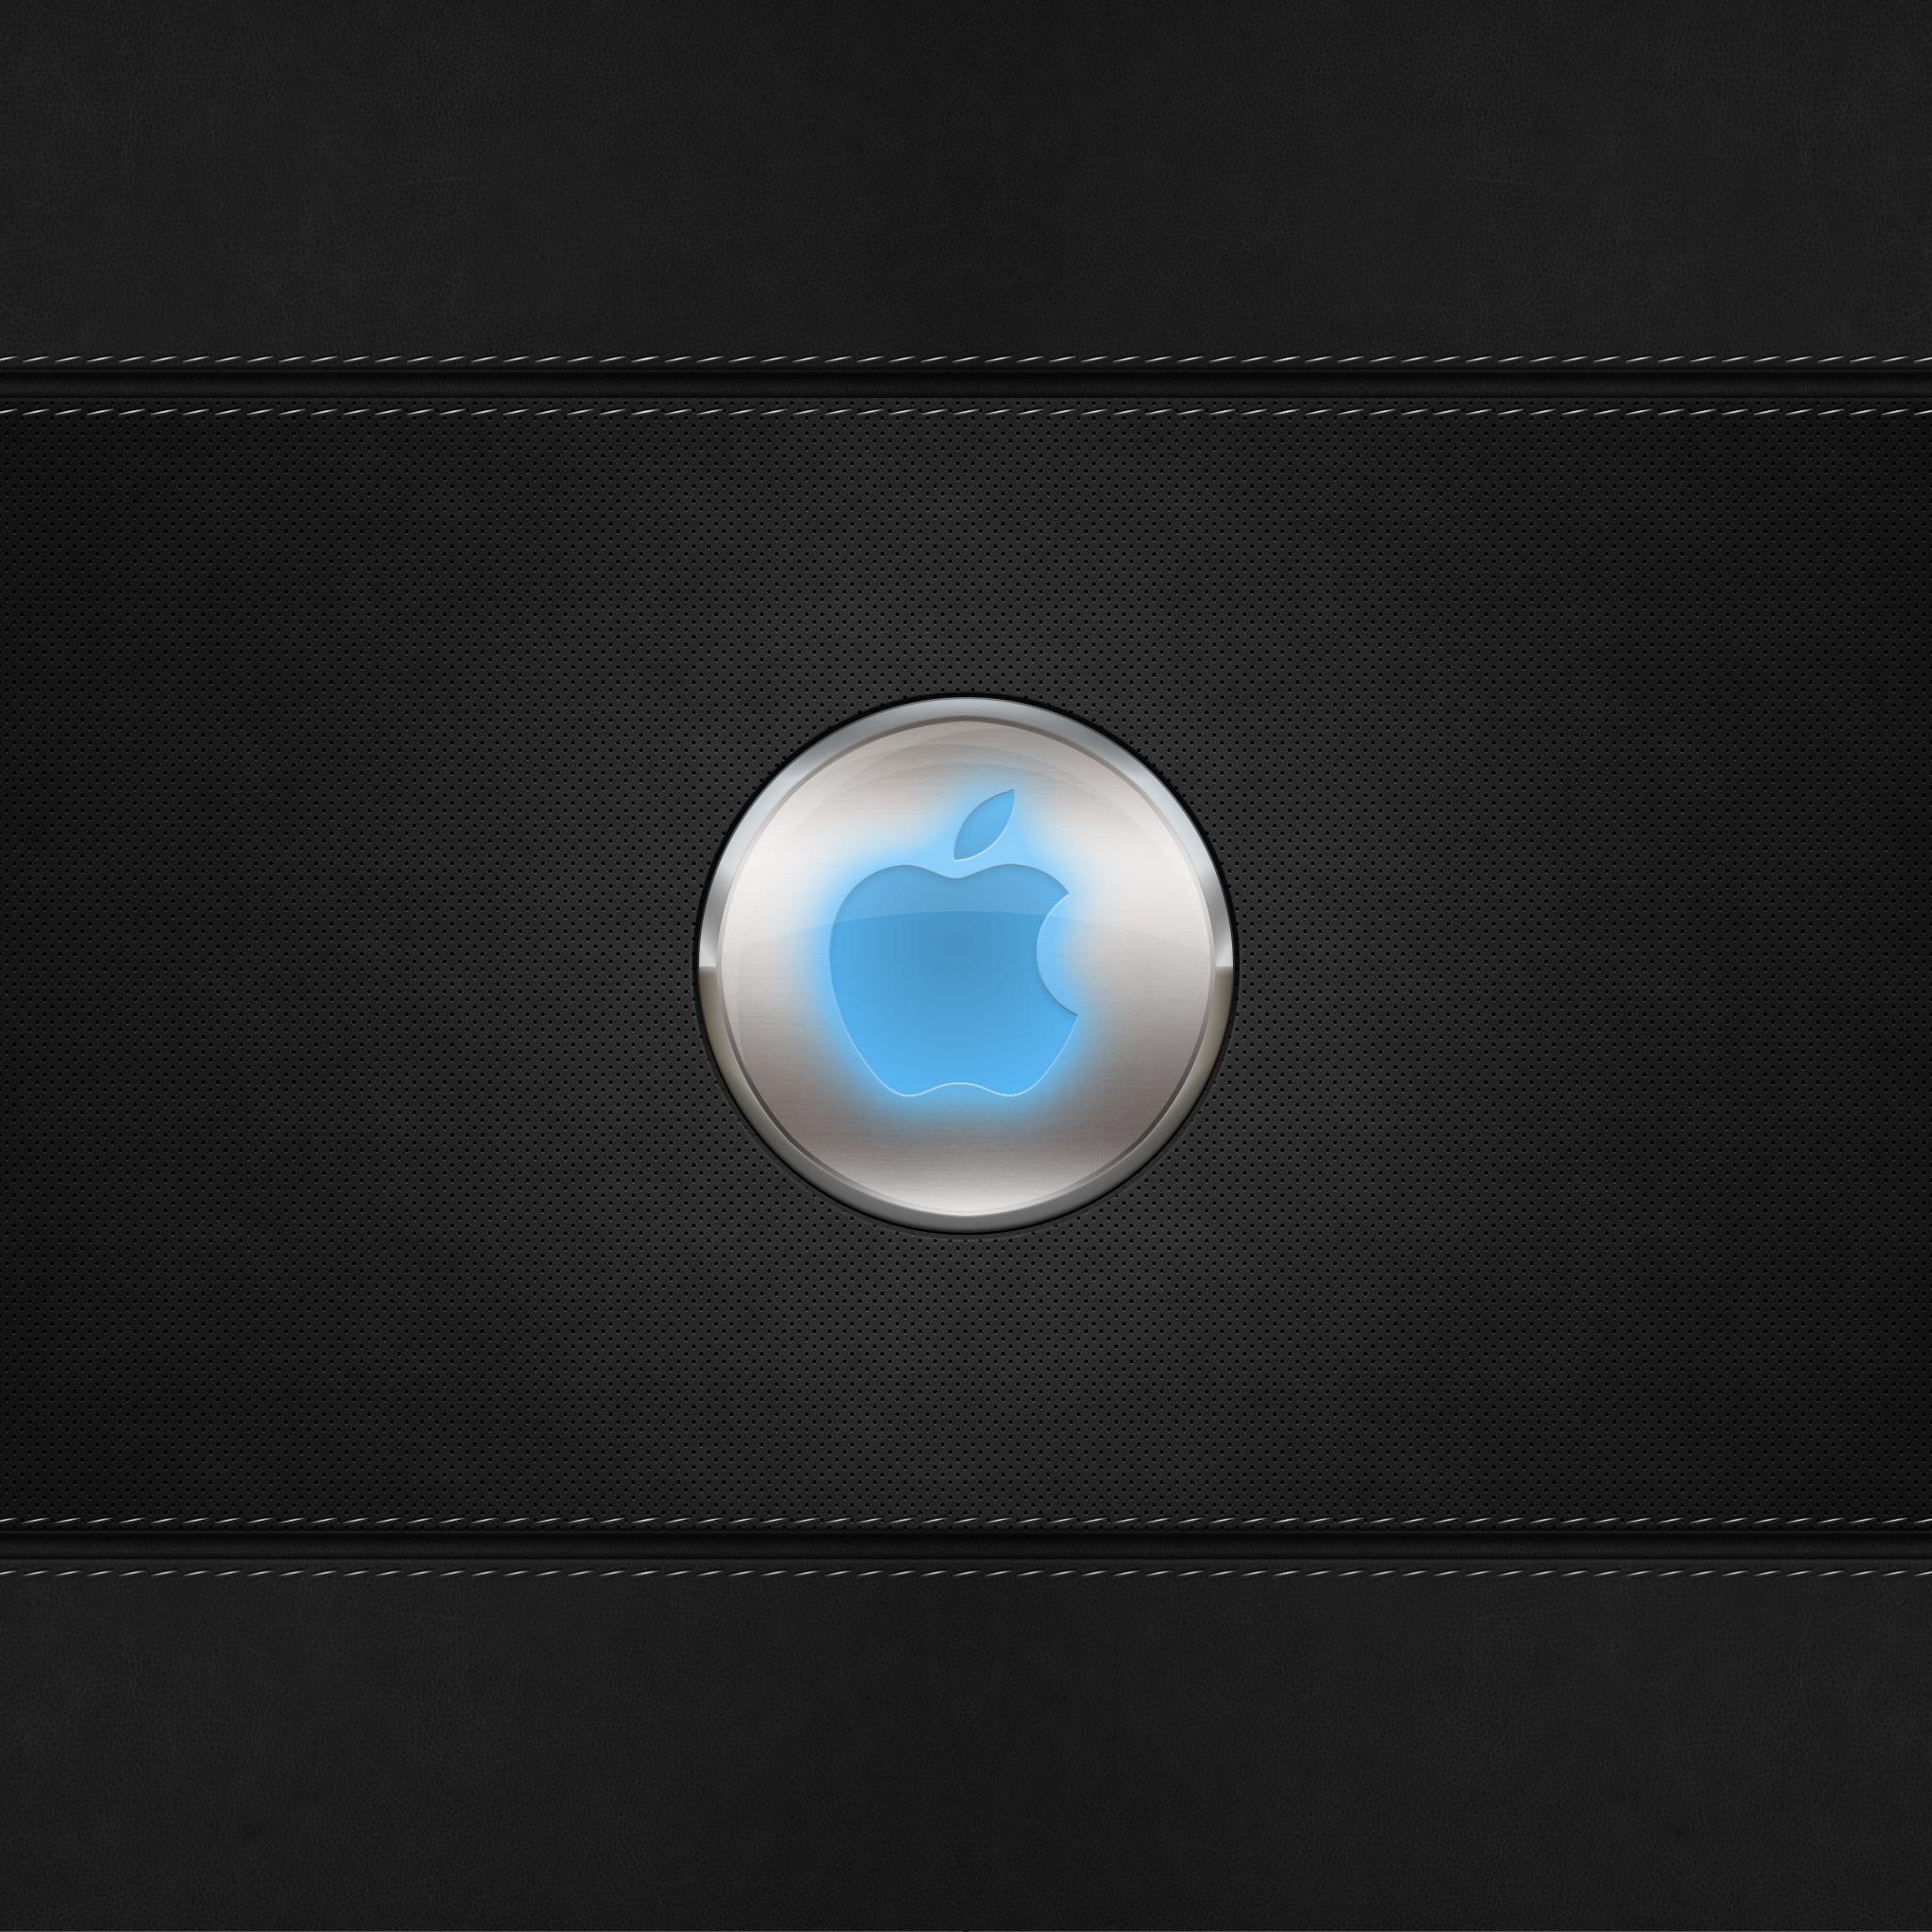 iPad 4 Wallpapers - Top Free iPad 4 Backgrounds ...